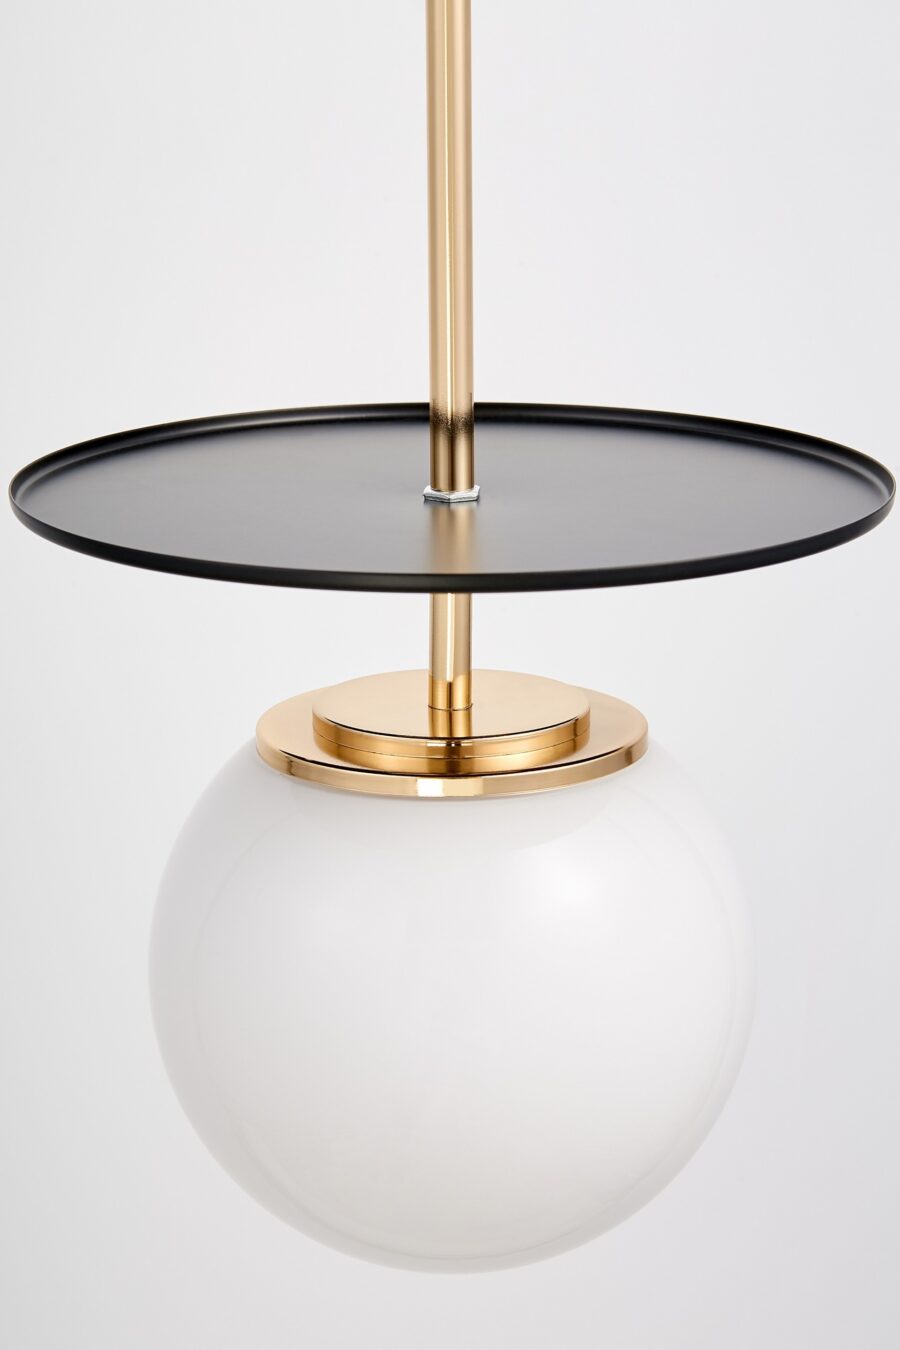 lampade moderne sospese con sfera bianca vetro